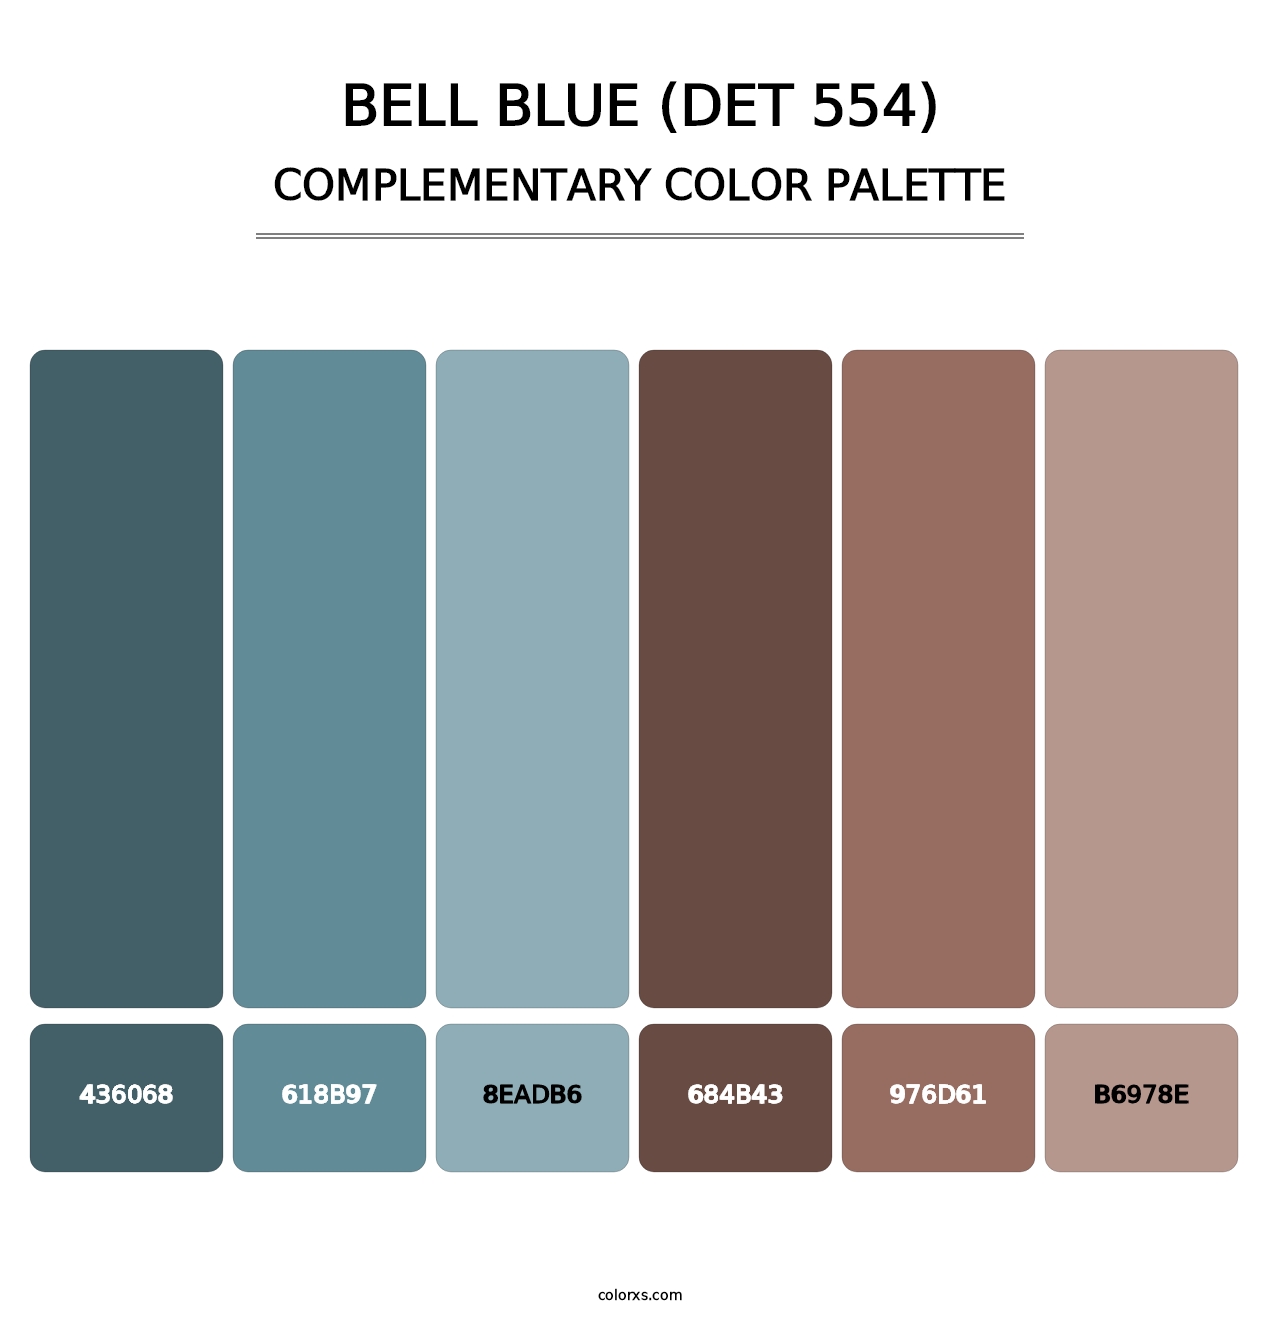 Bell Blue (DET 554) - Complementary Color Palette